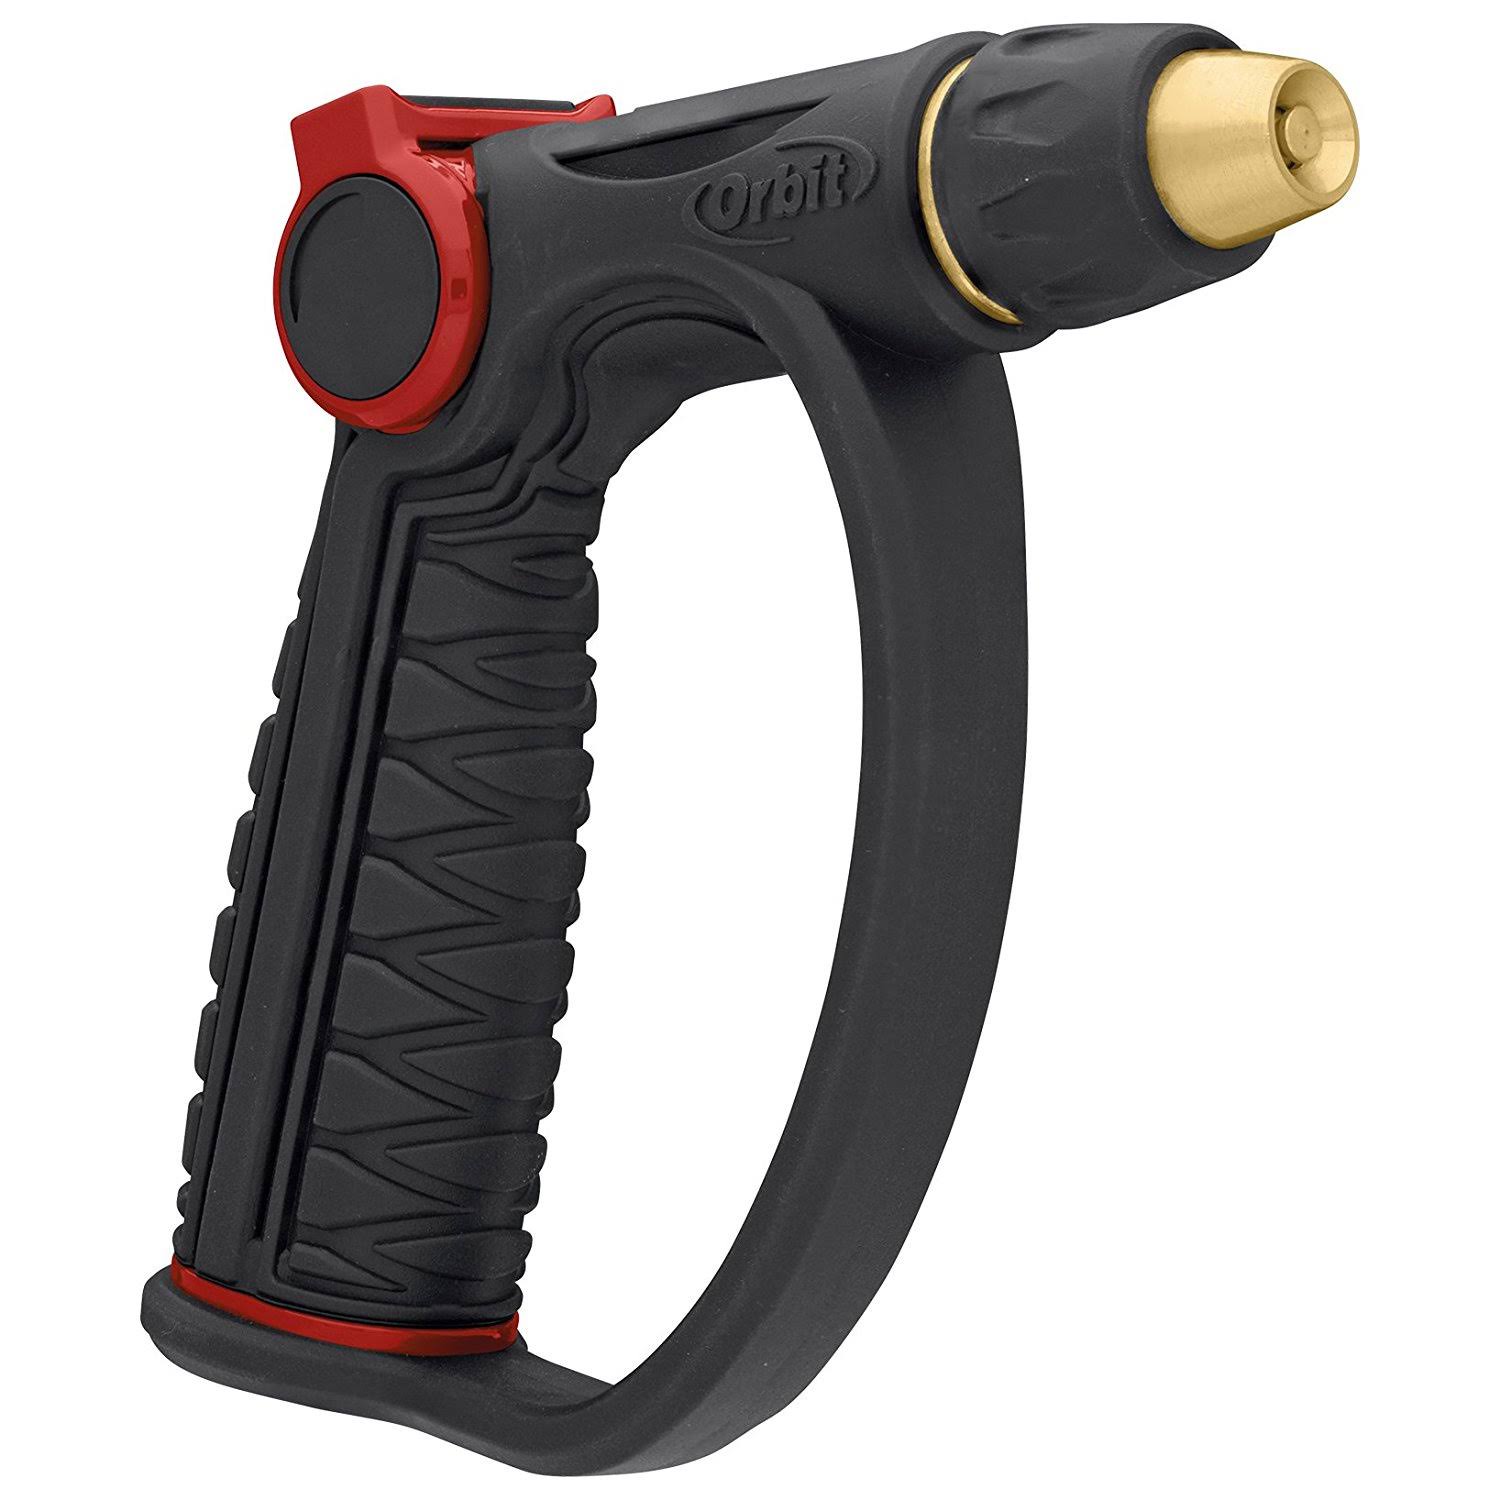 Orbit 58984 Thumb Control D-grip Contractor Adjustable Pistol - Brass Nozzle